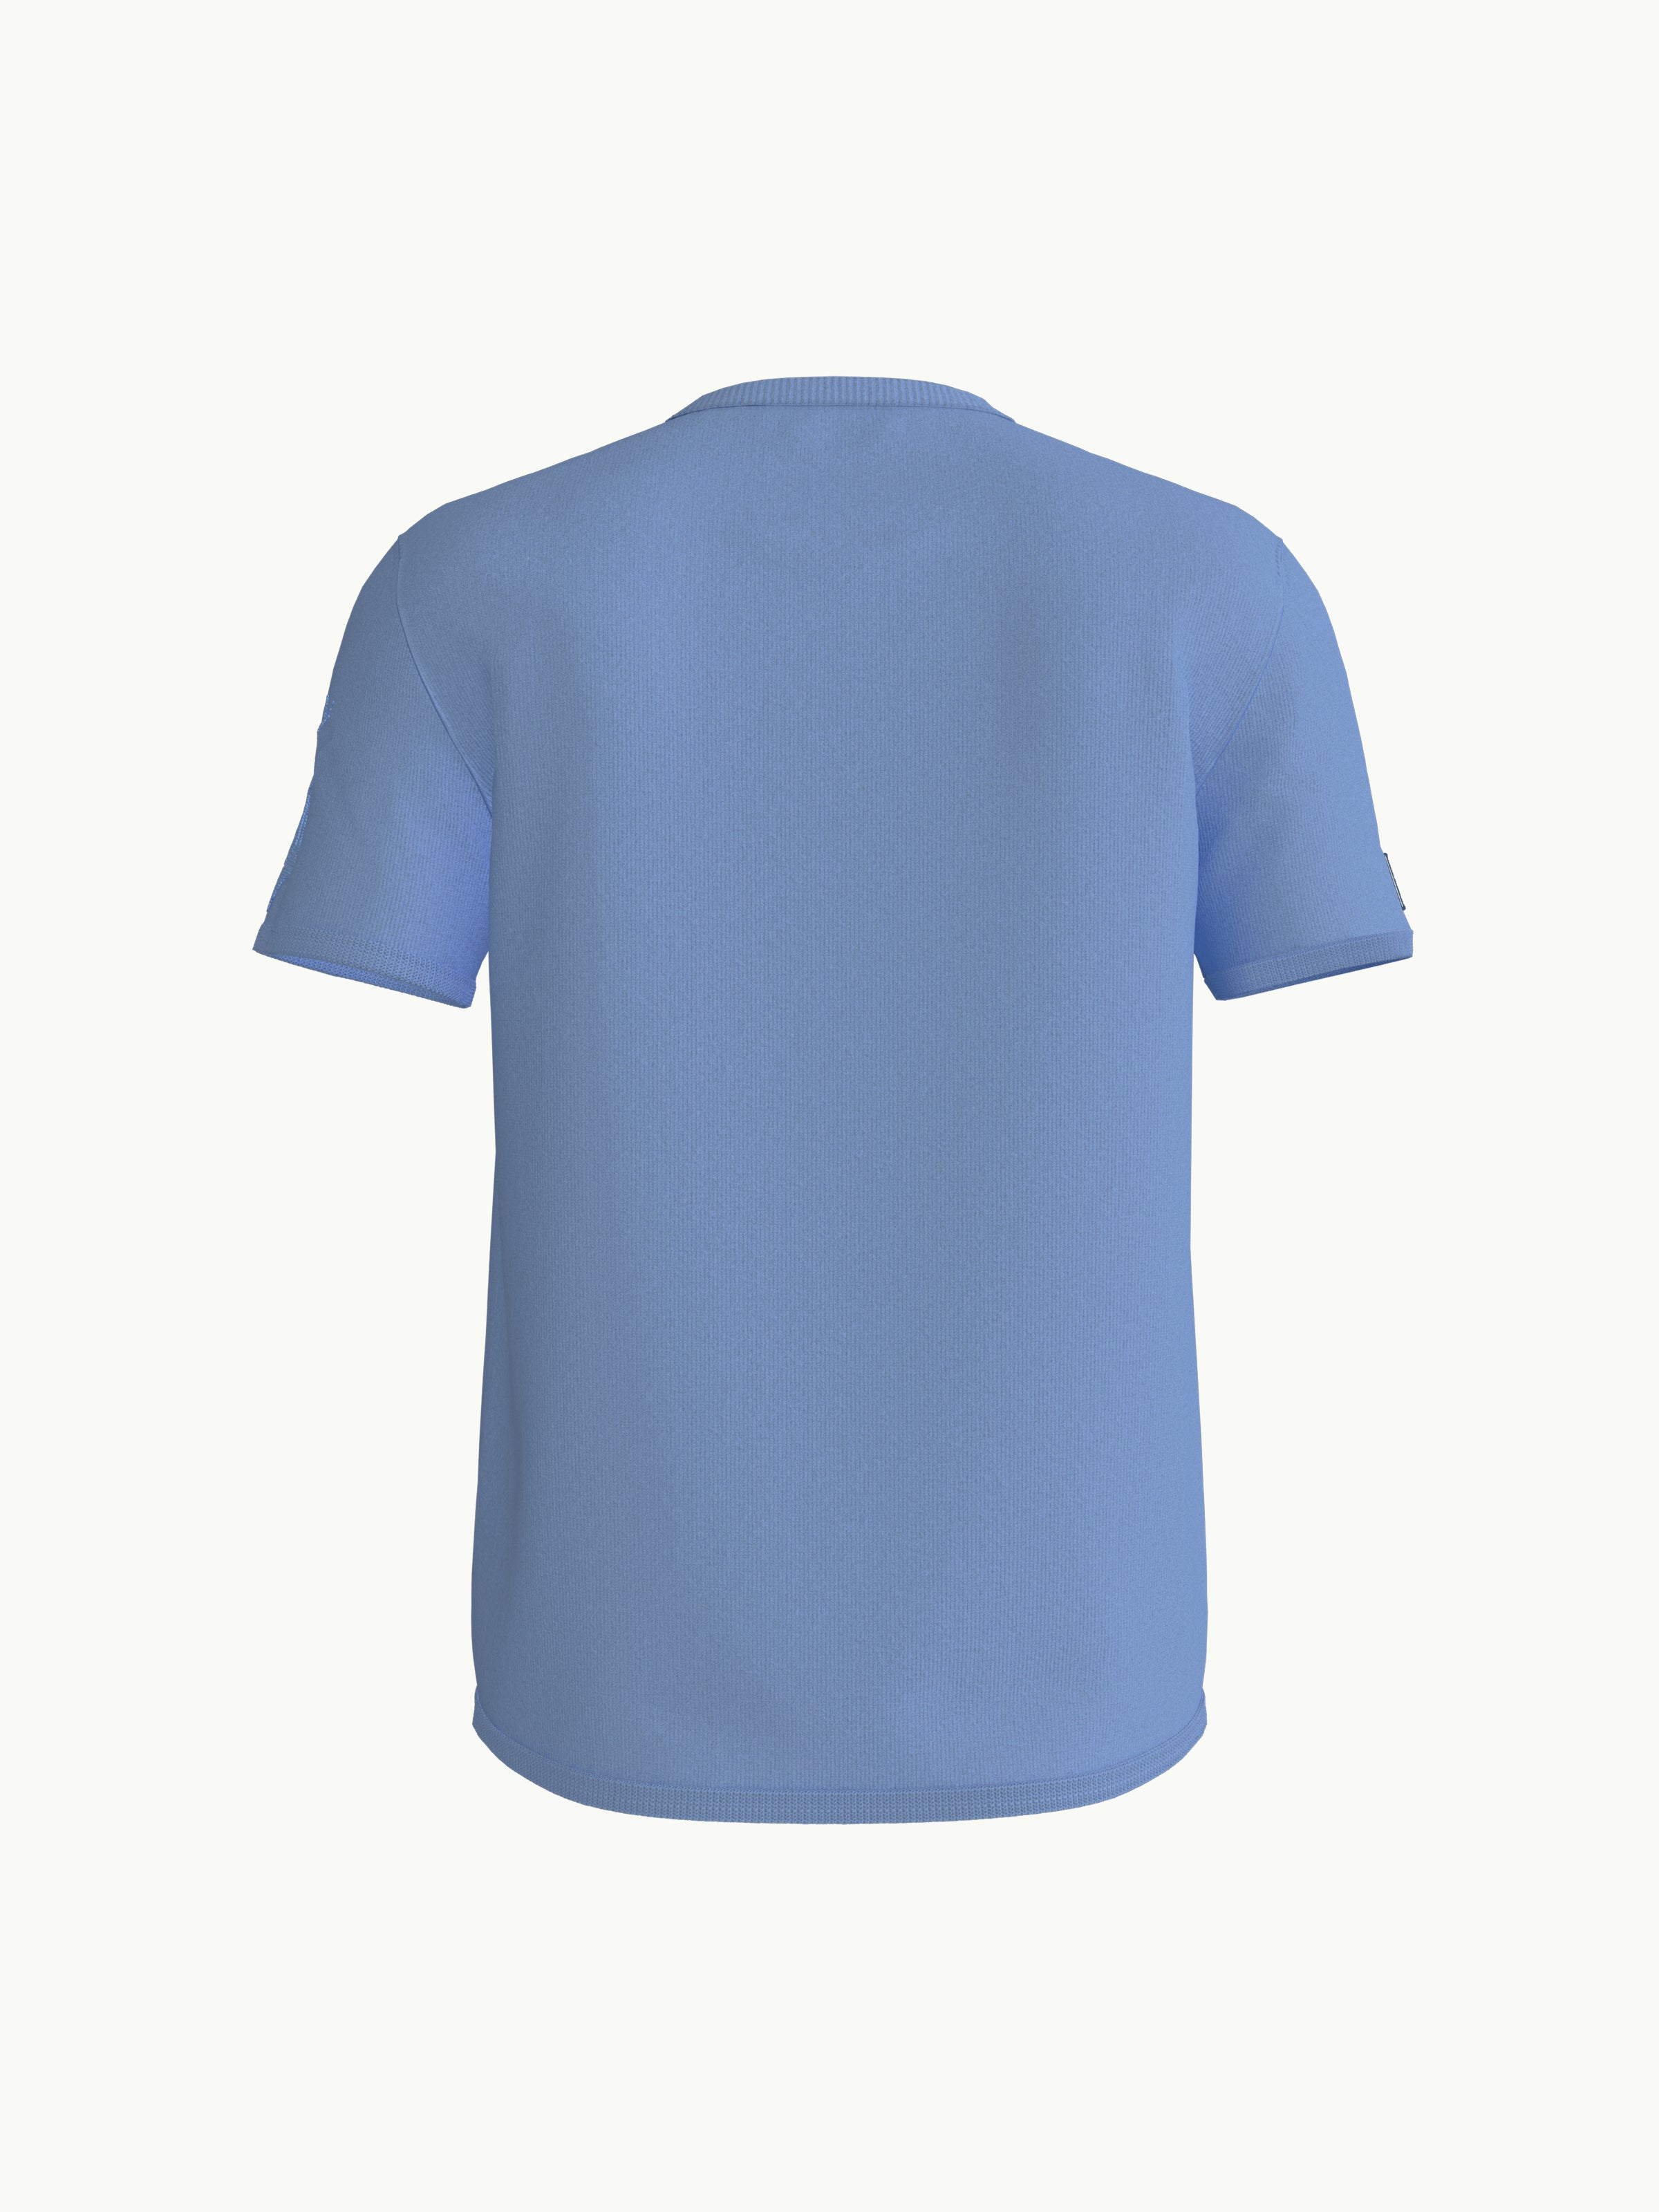 Men's T-Shirt - Rainbowfish Blue